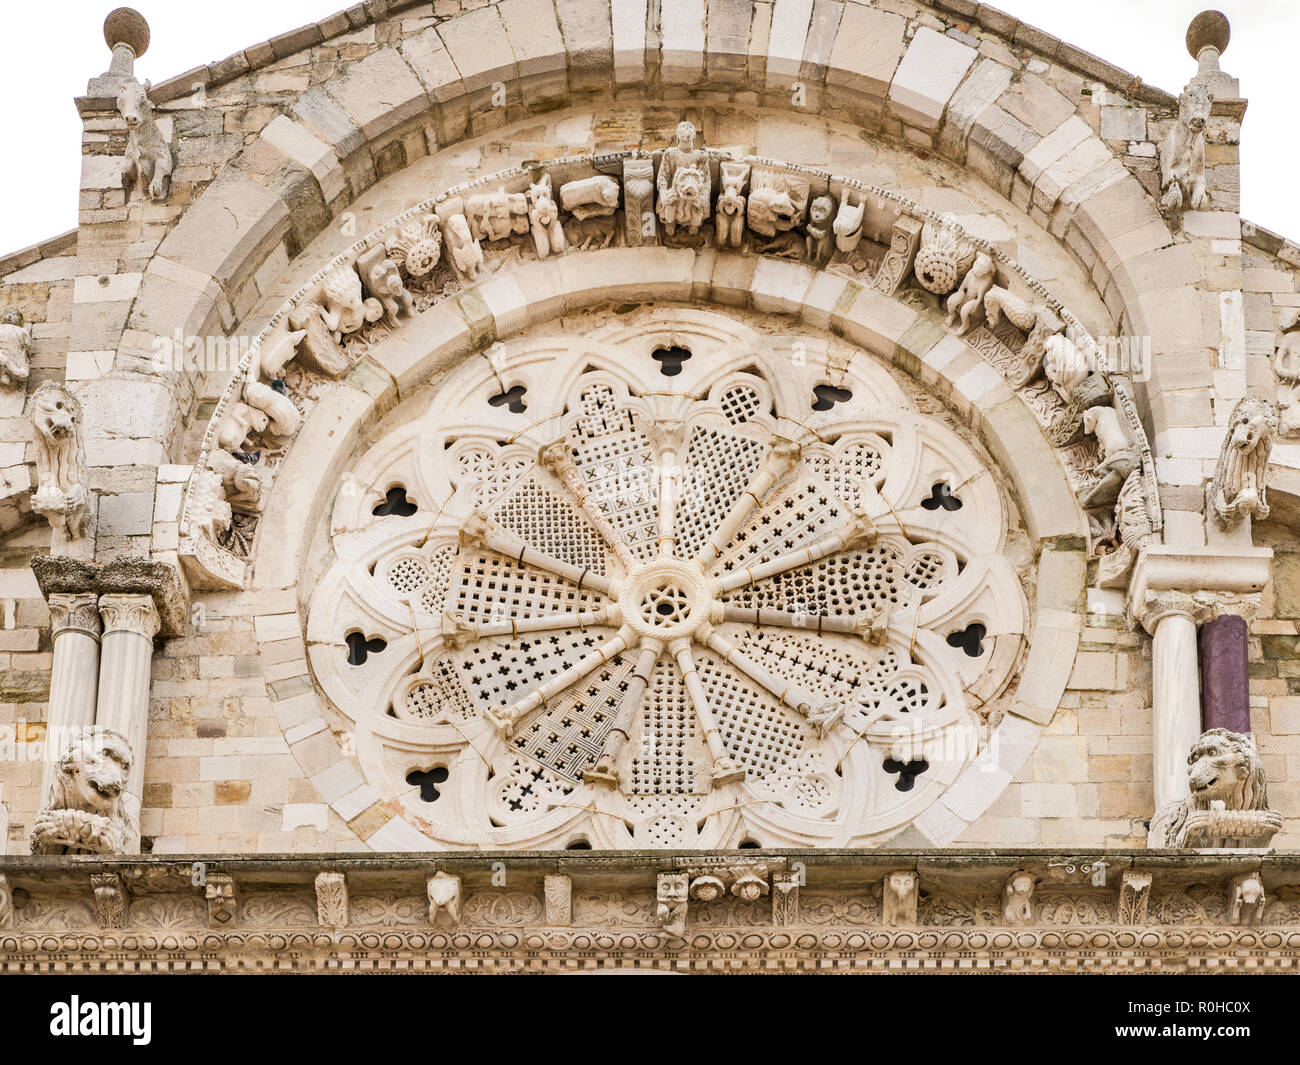 Rose window at Cattedrale di Troia, Romanesque style, in Troia, Apulia, Italy Stock Photo